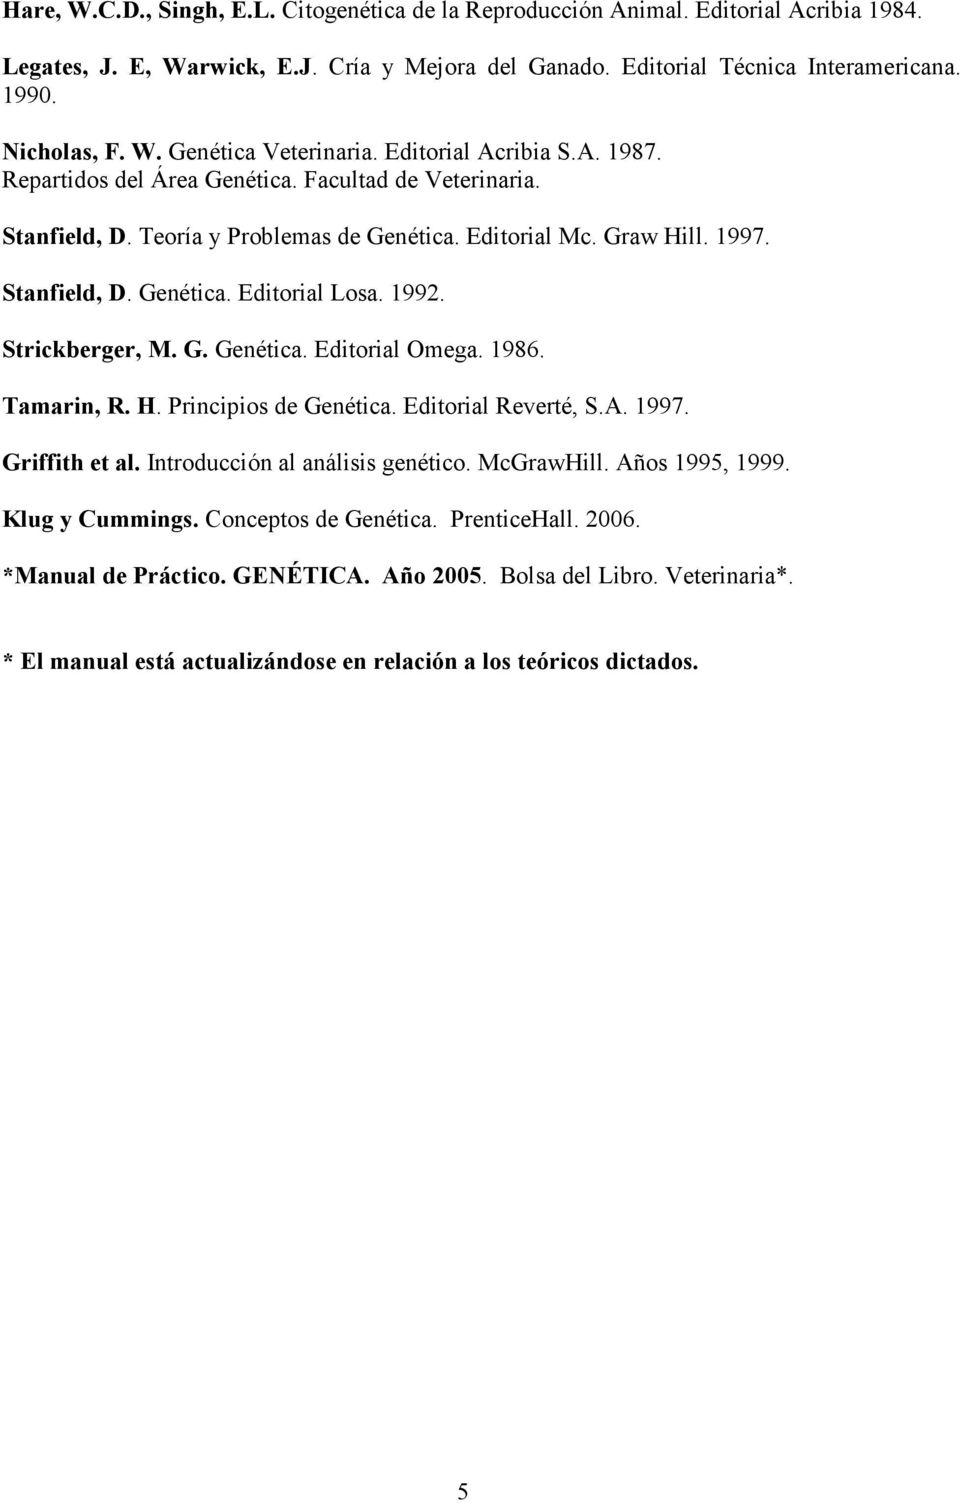 1992. Strickberger, M. G. Genética. Editorial Omega. 1986. Tamarin, R. H. Principios de Genética. Editorial Reverté, S.A. 1997. Griffith et al. Introducción al análisis genético. McGrawHill.